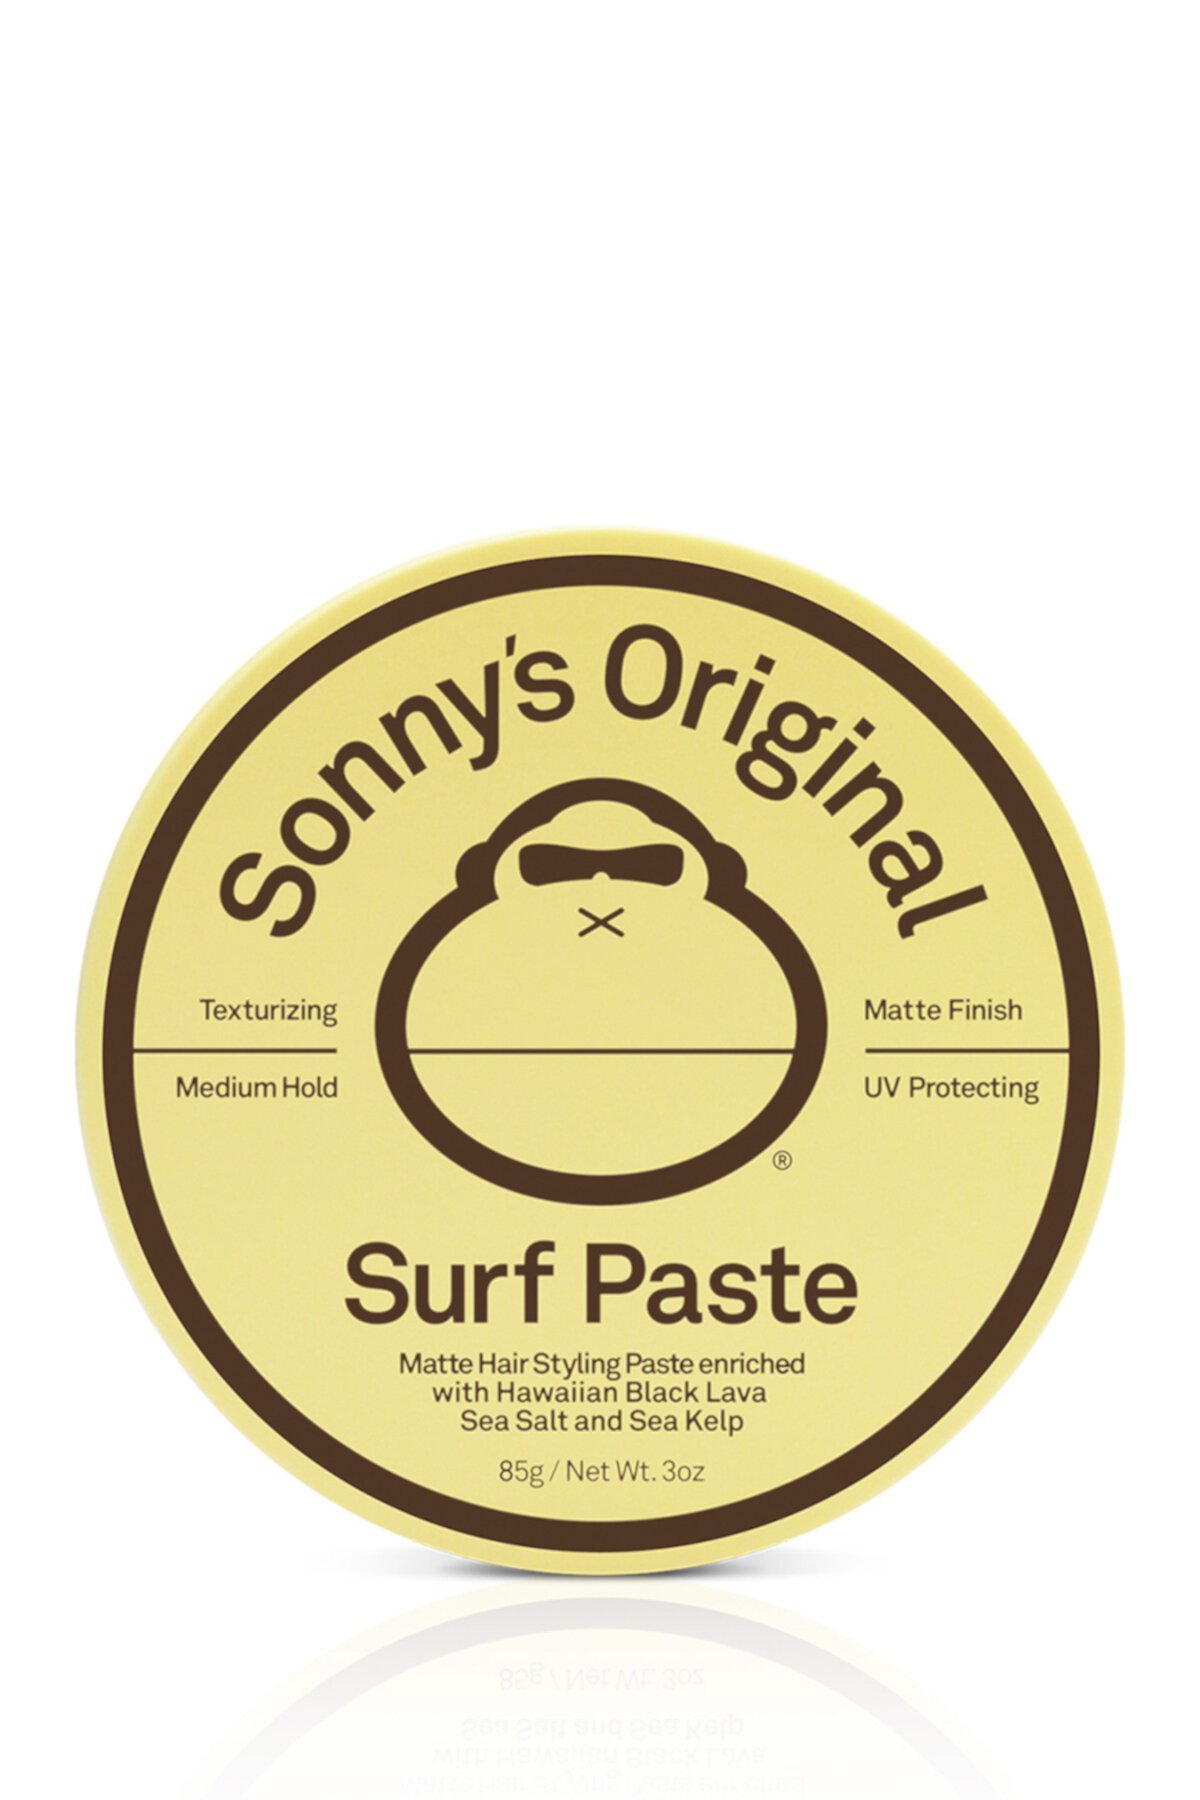 Sonny's Original Hair Texturizing Surf Paste - 3 унции. Sun Bum